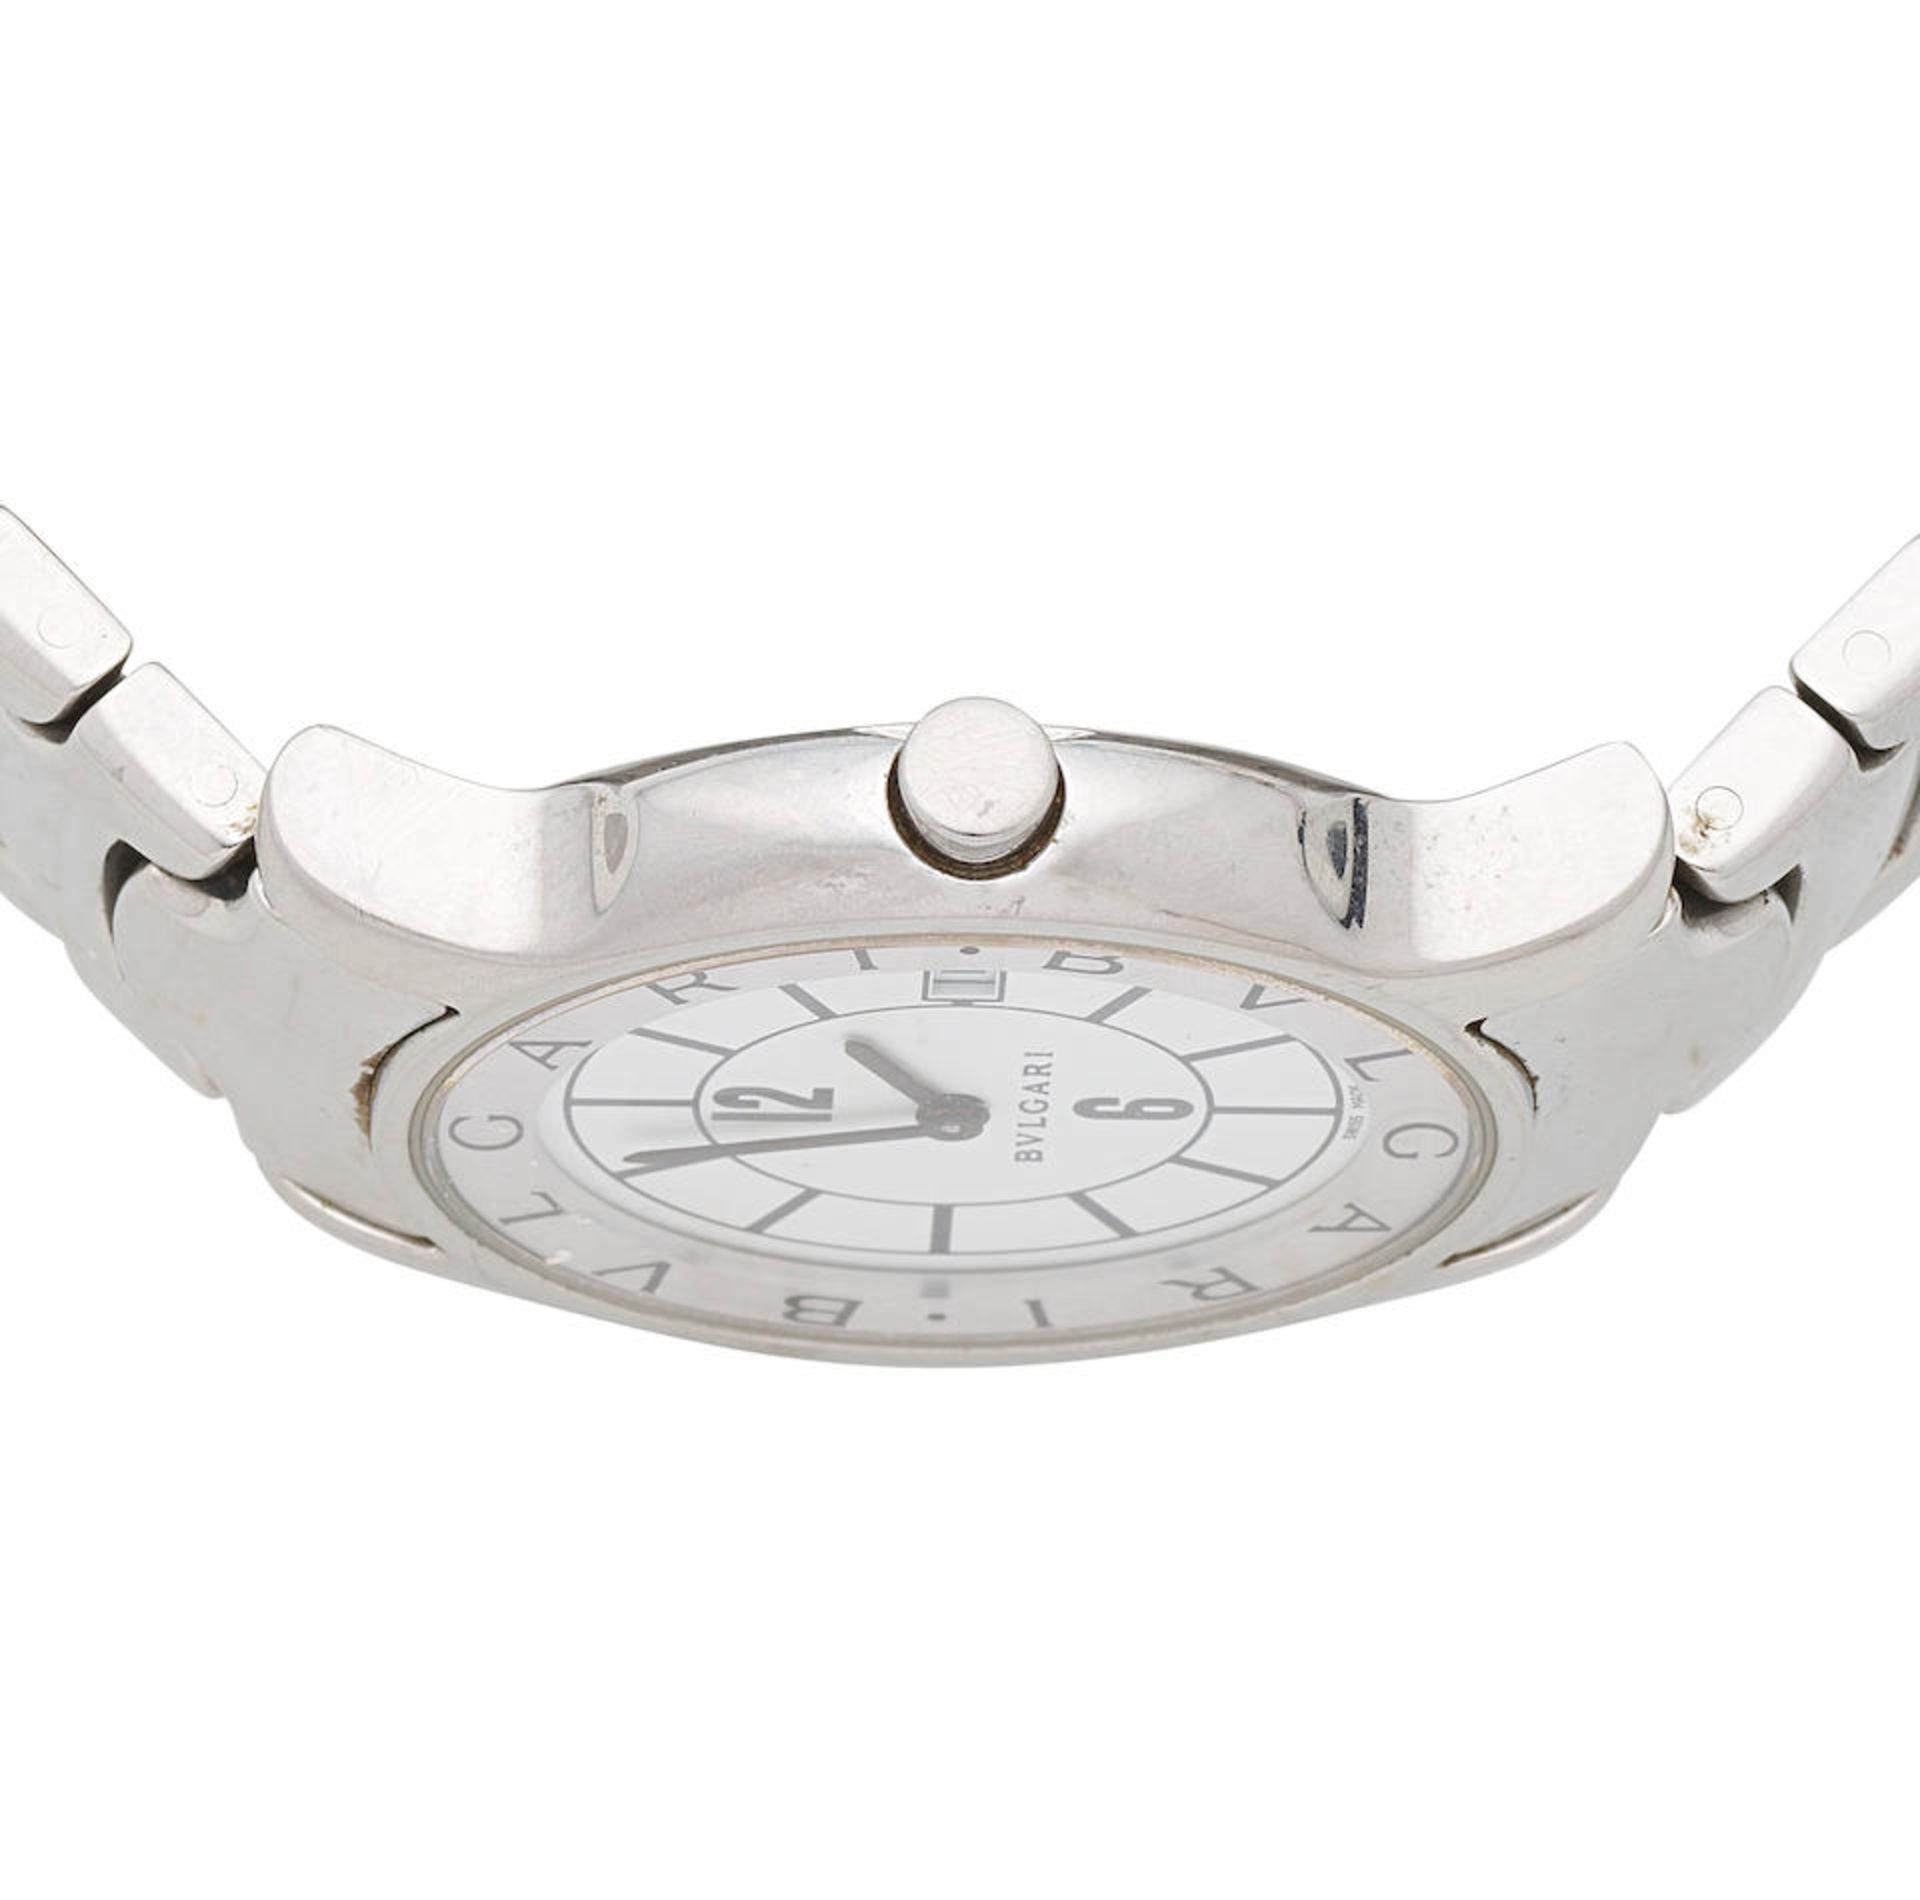 Bulgari. A Limited Edition stainless steel quartz calendar bracelet watch Solotempo, Ref: ST 35... - Bild 3 aus 4